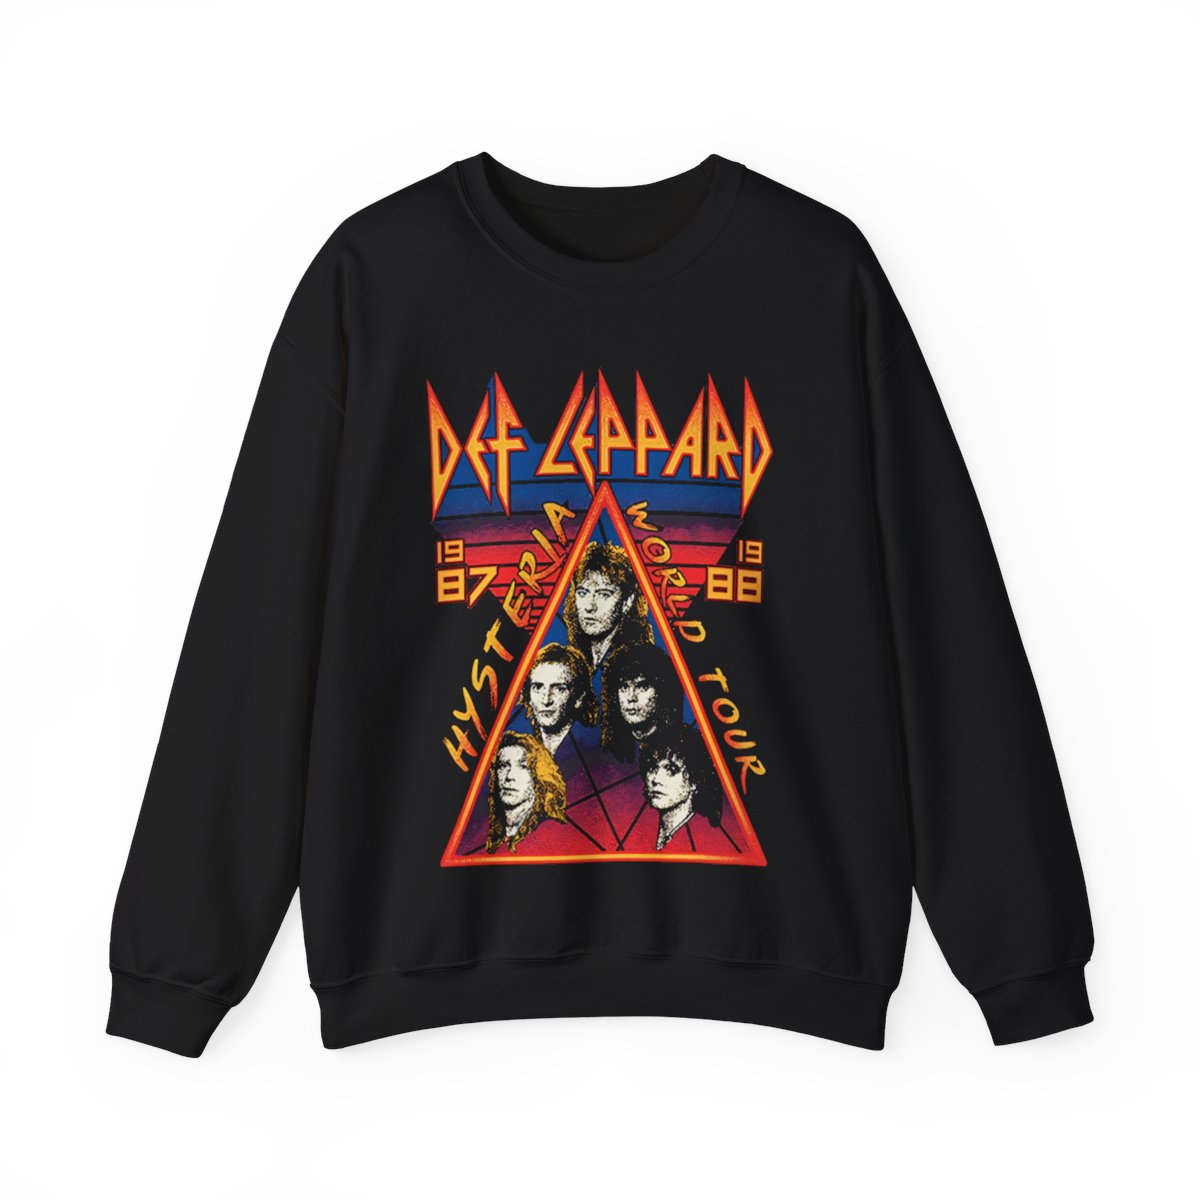 Def Leppard Shirt Classic Def Leppard Hysteria Tour 80s Rock Music Shirt & Stickers Unisex Heavy Blend Crewneck Sweatshirt